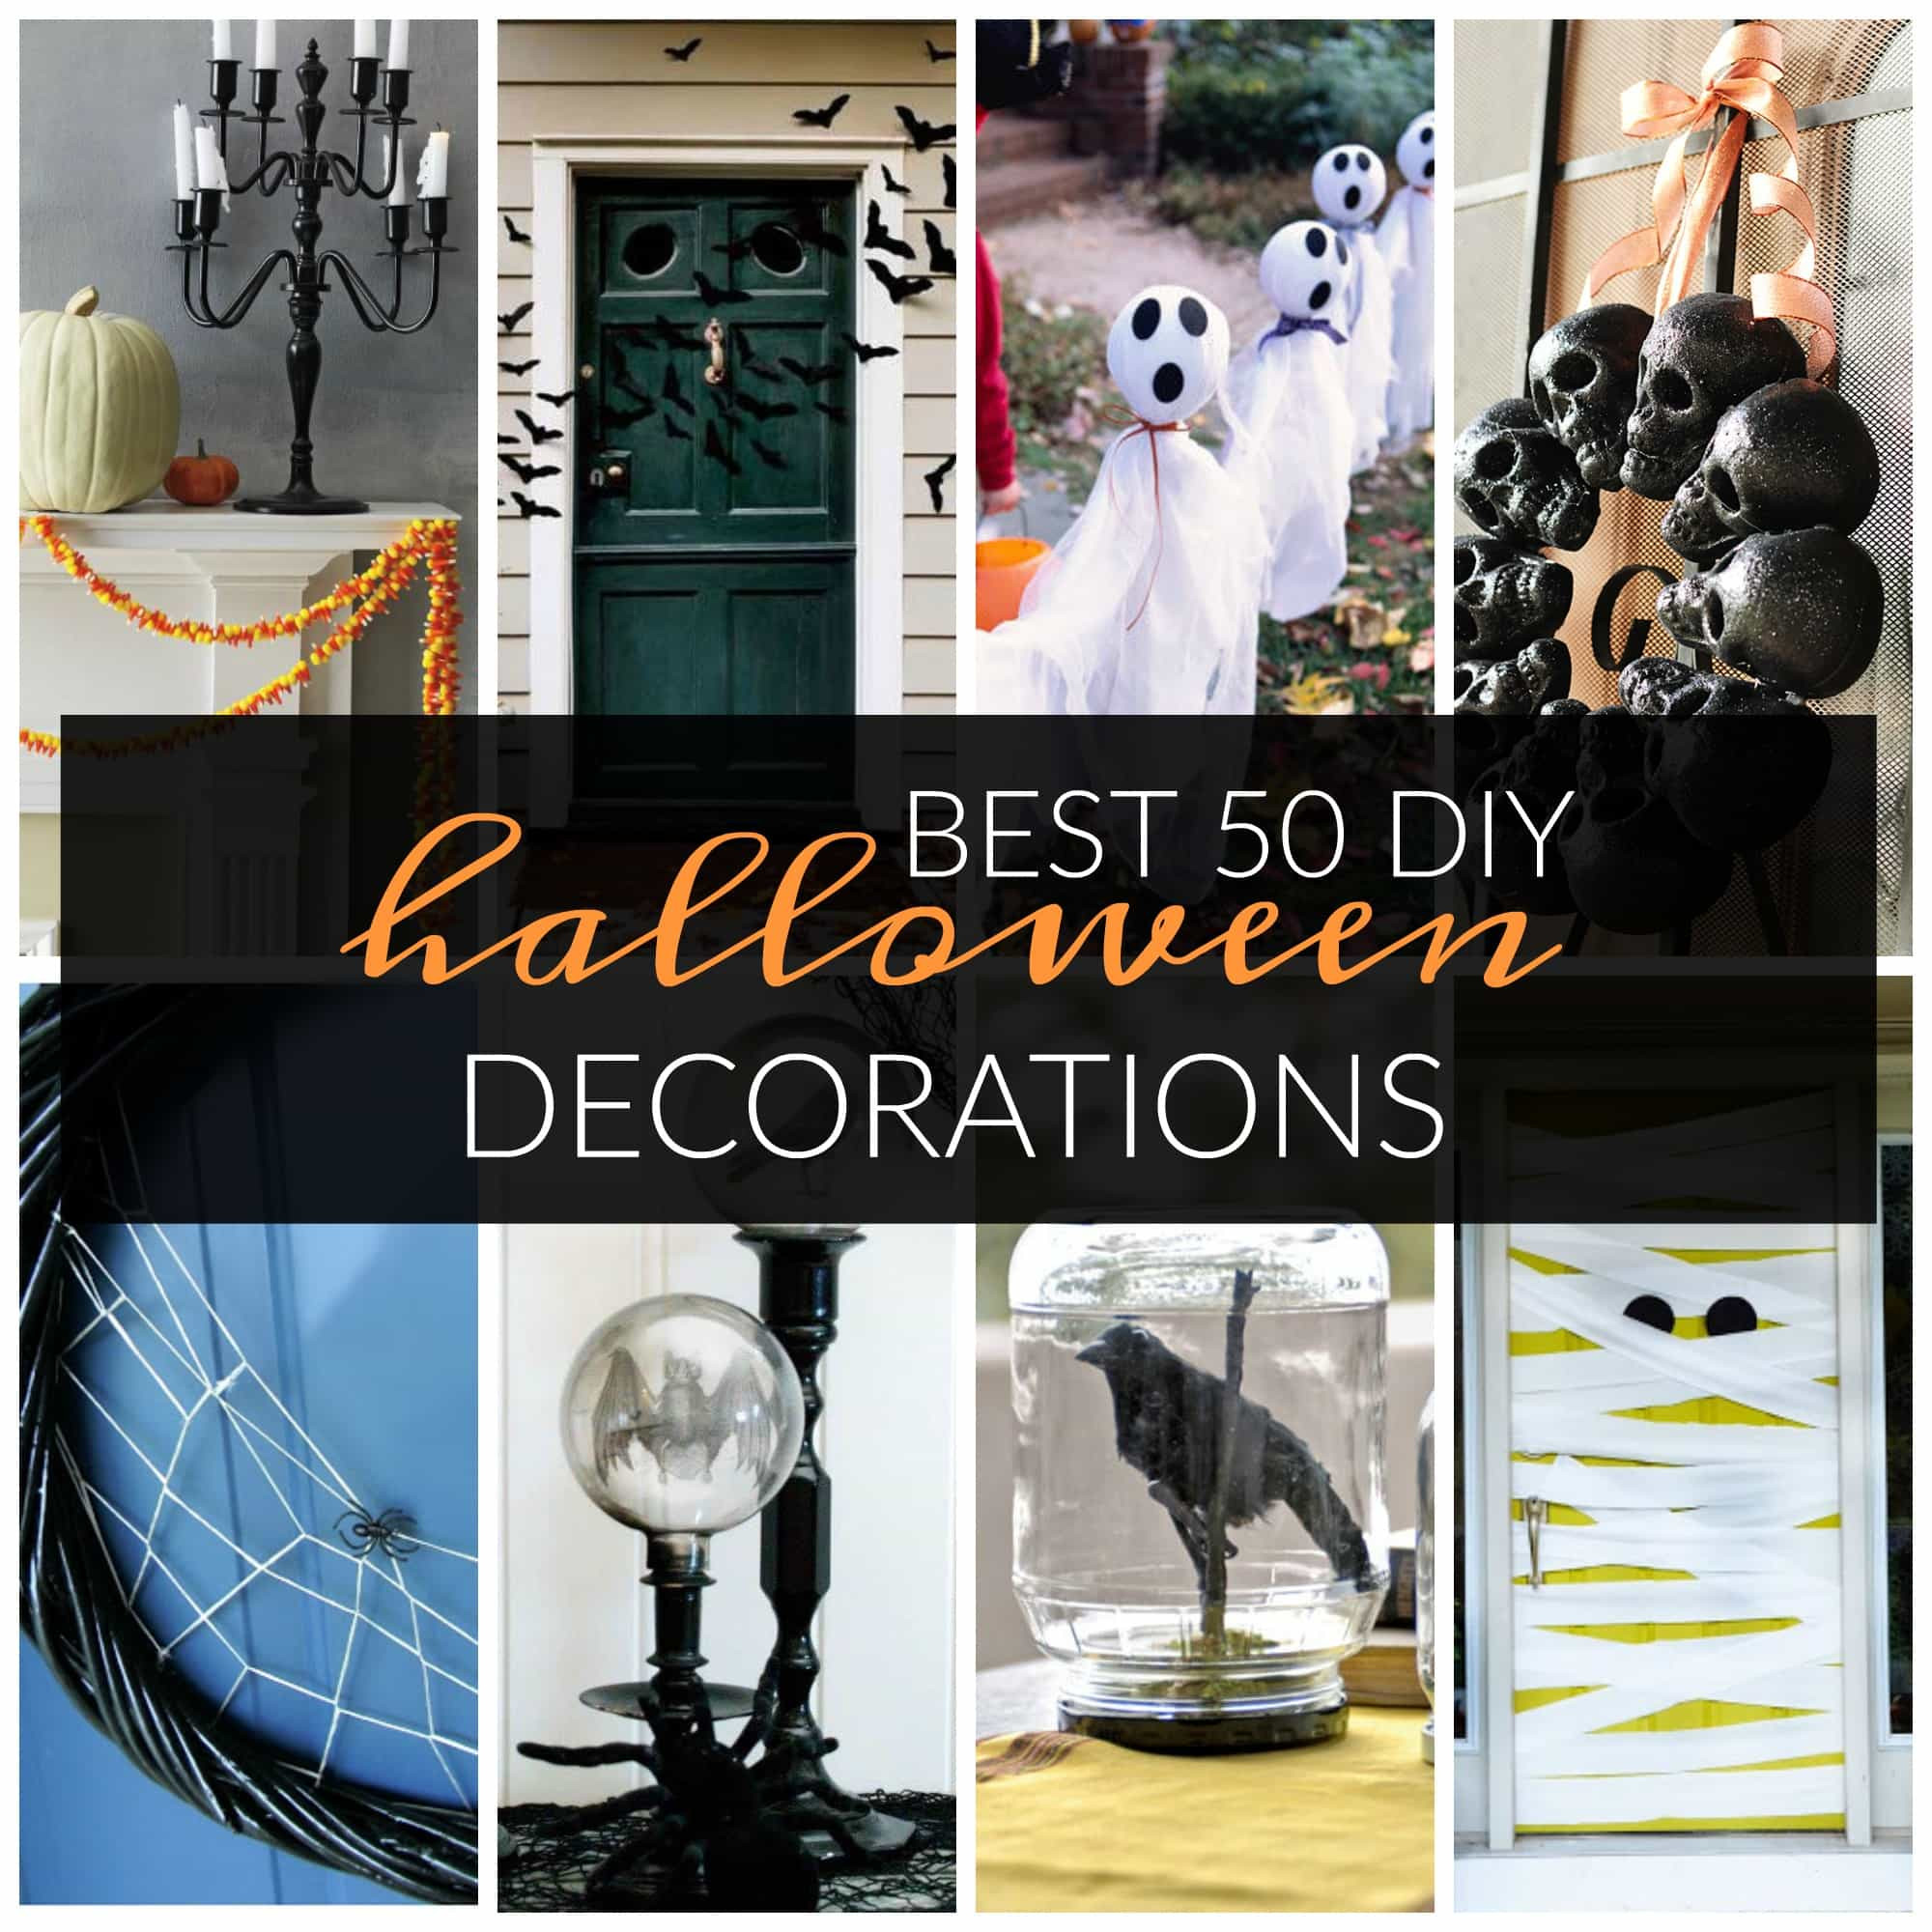 DIY Halloween Decoration Ideas
 Best 50 DIY Halloween Decorations A Dash of Sanity